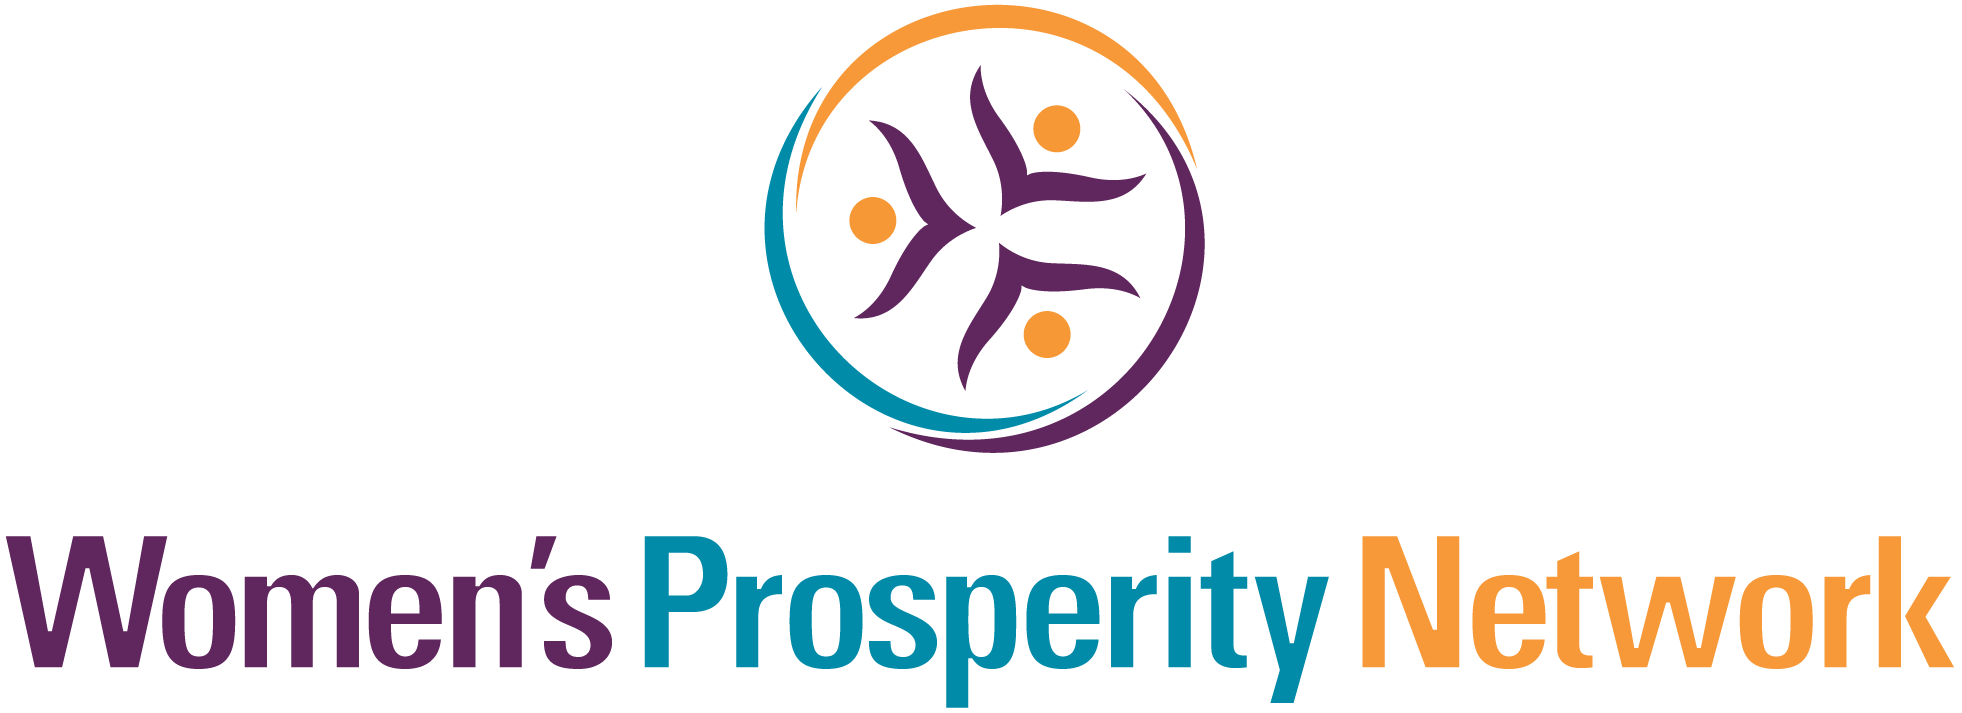 Womens Prosperity network 2018 FULL logo TRI COLOR